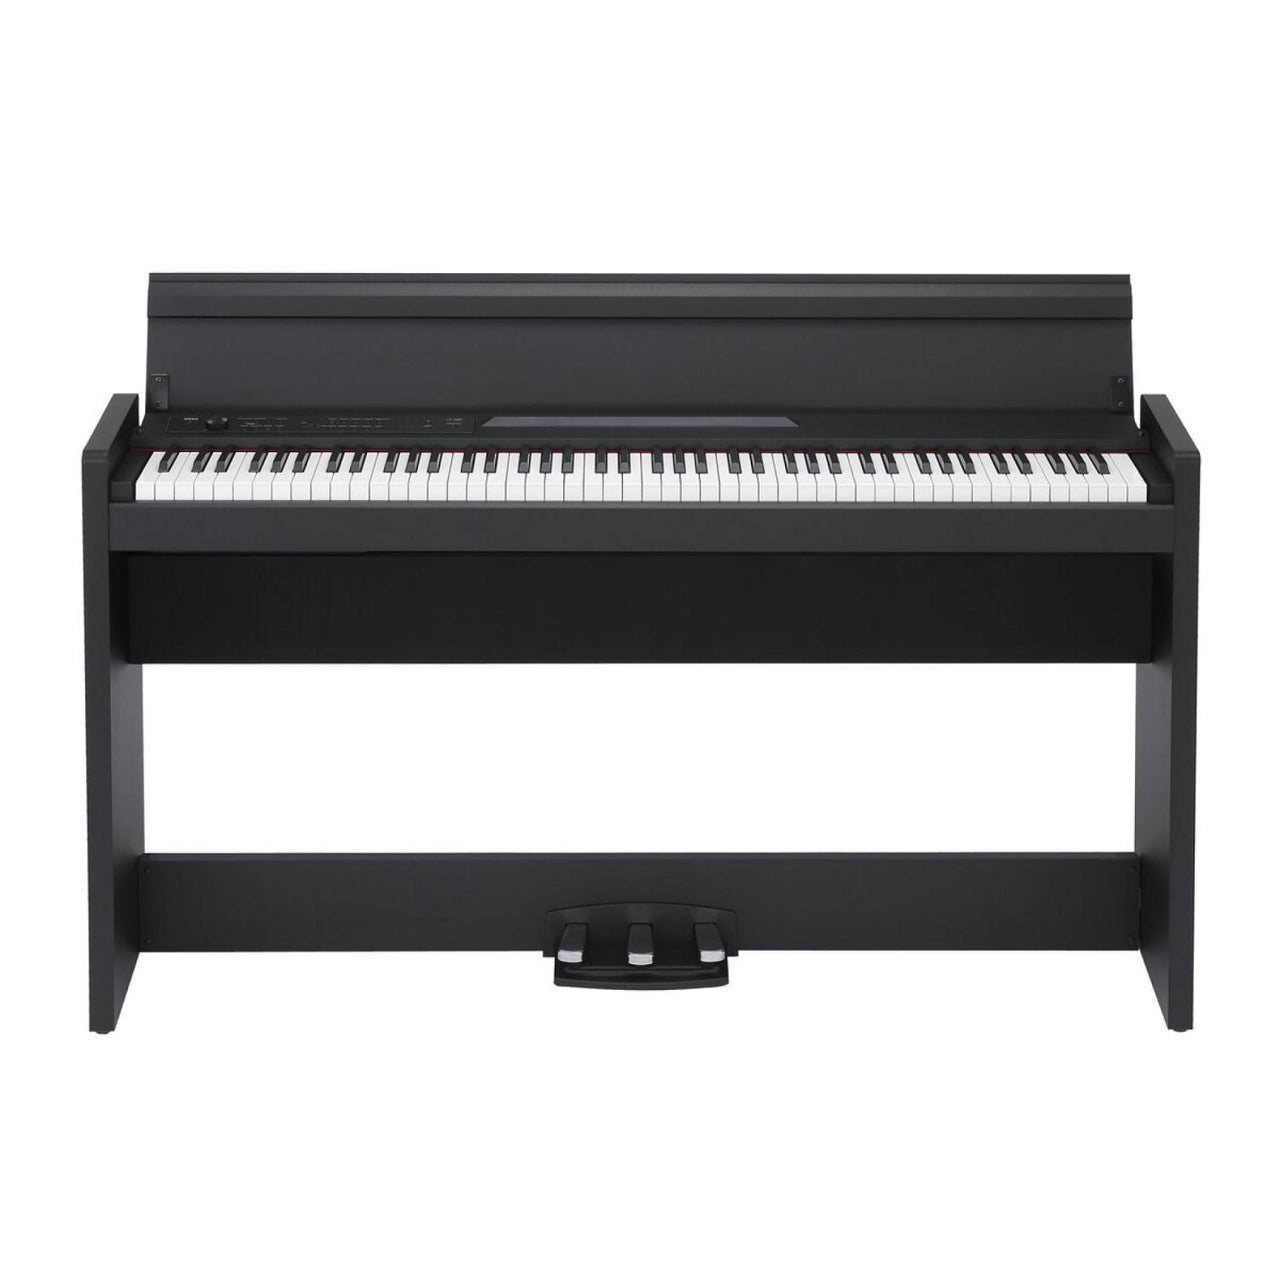 Piano Korg Lp-380 Bk Digital 88 Teclas Pesadas Negro